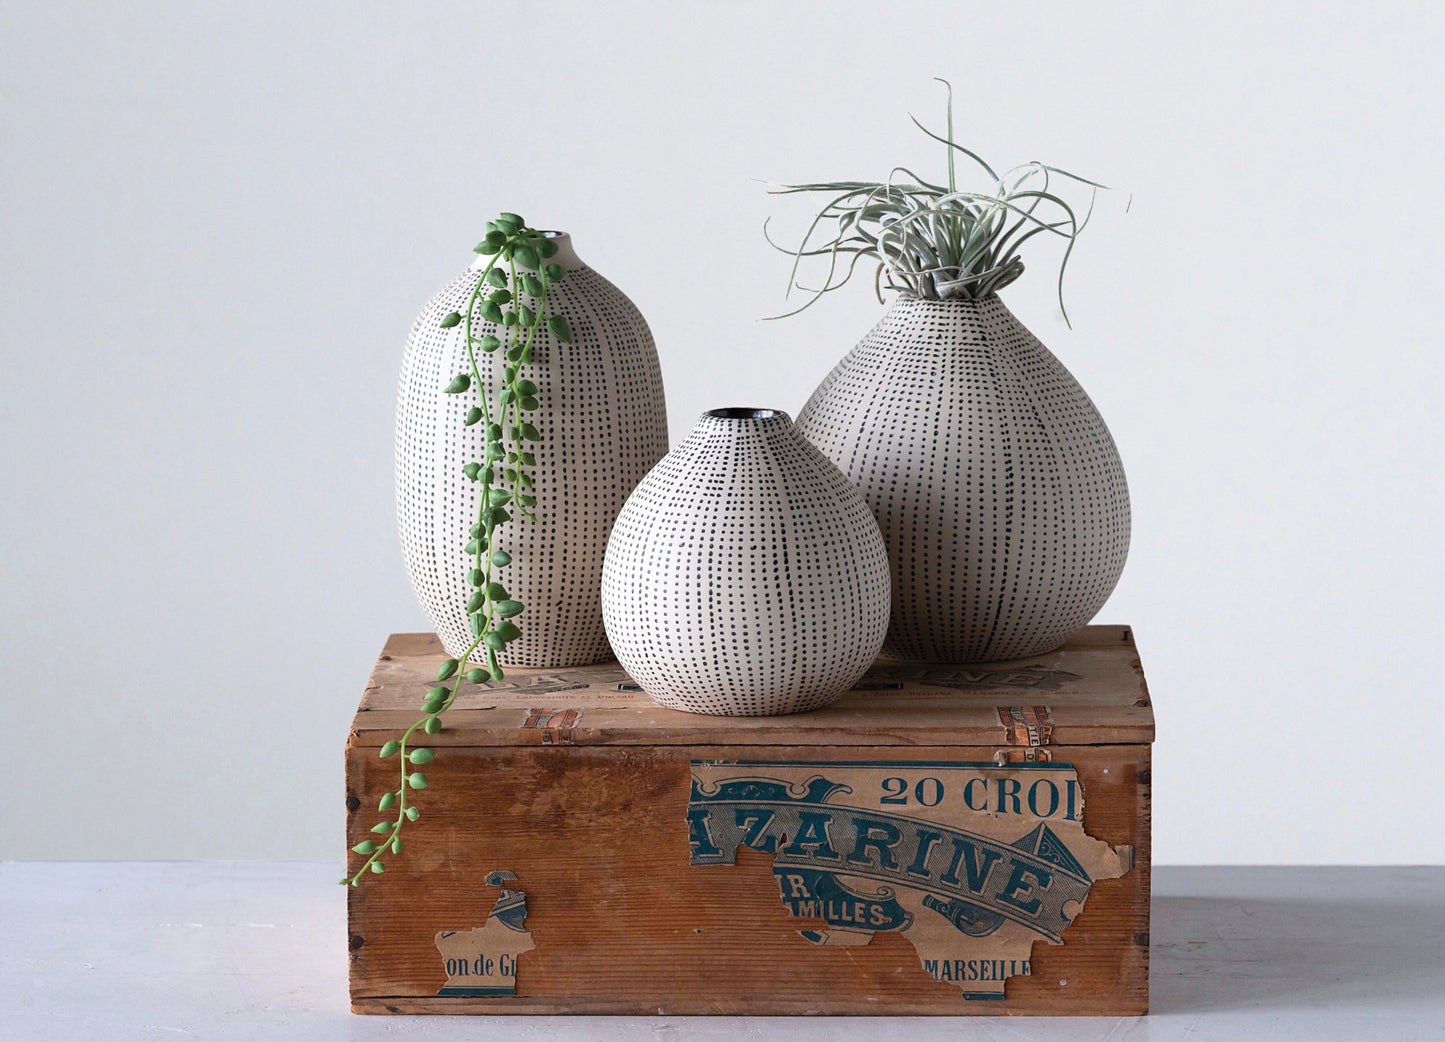 Stoneware Textured Vases